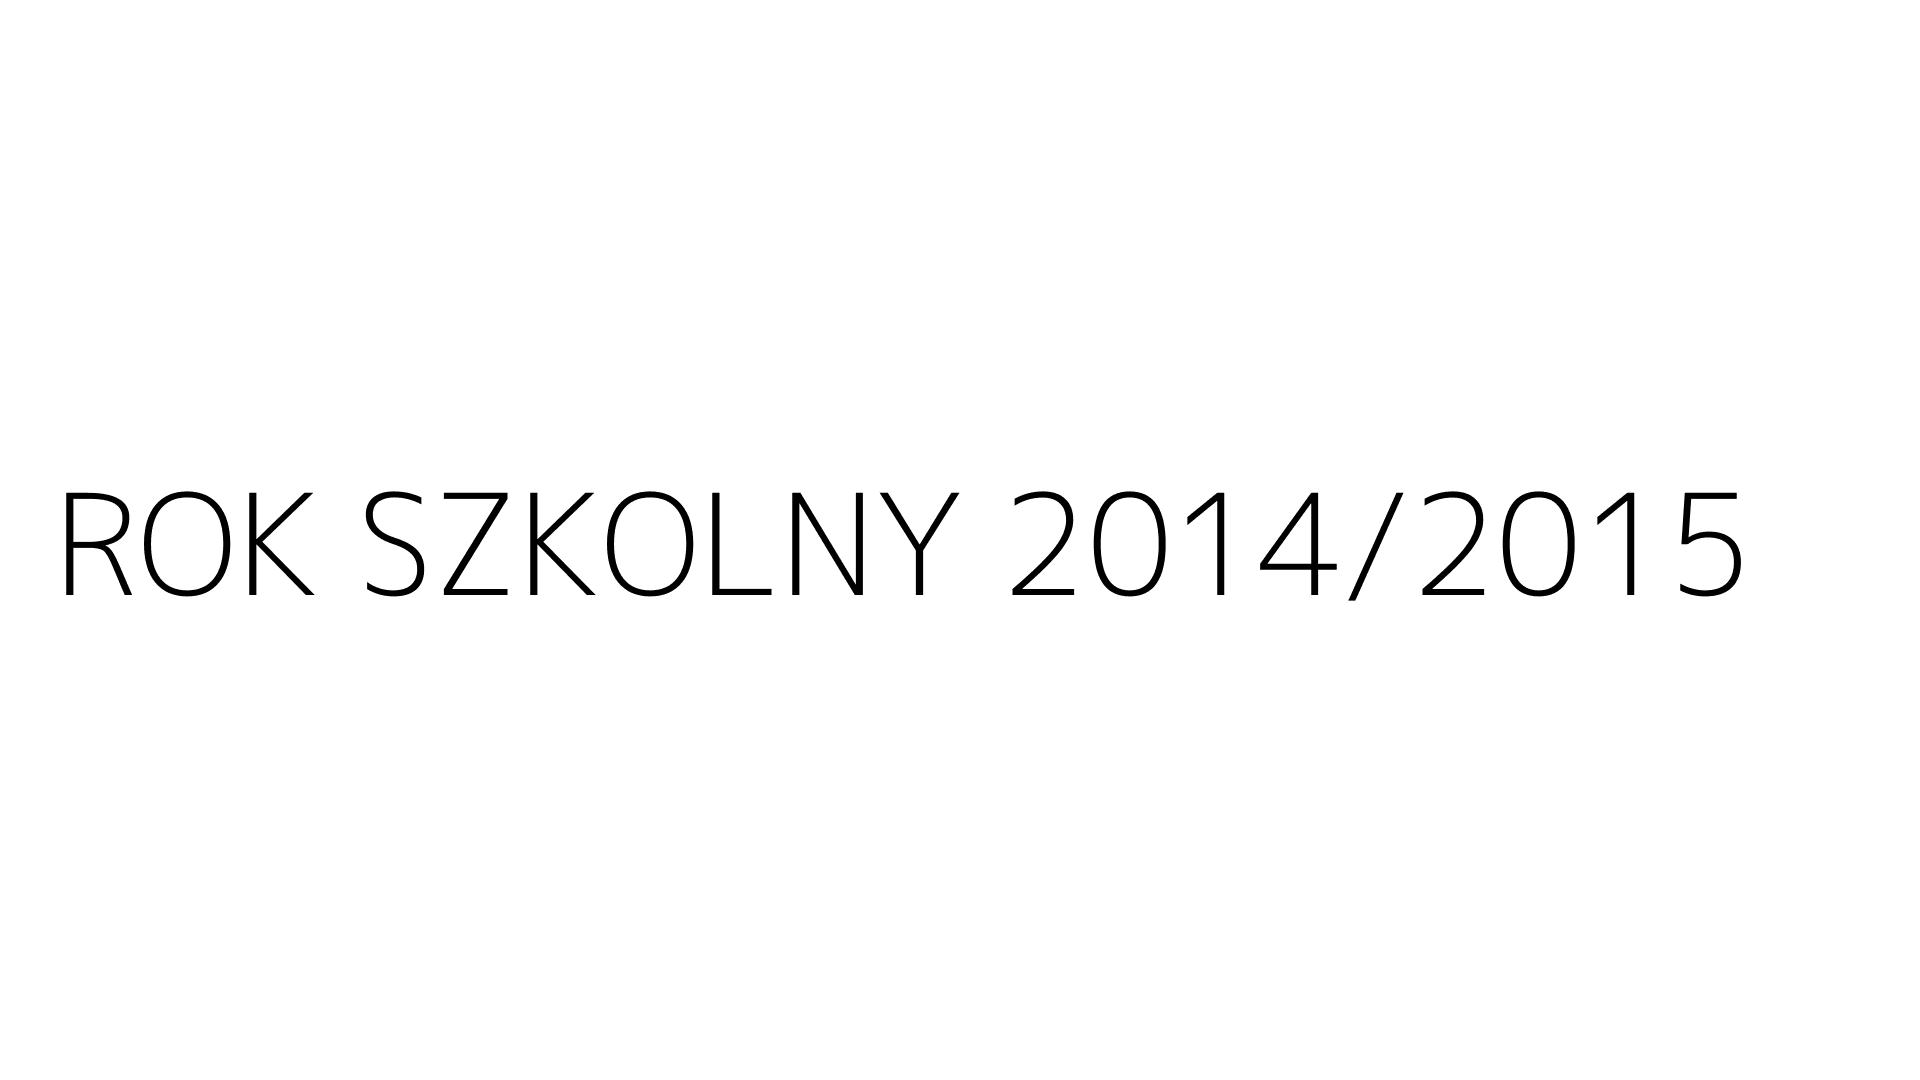 ROK SZKOLNY 2014/2015